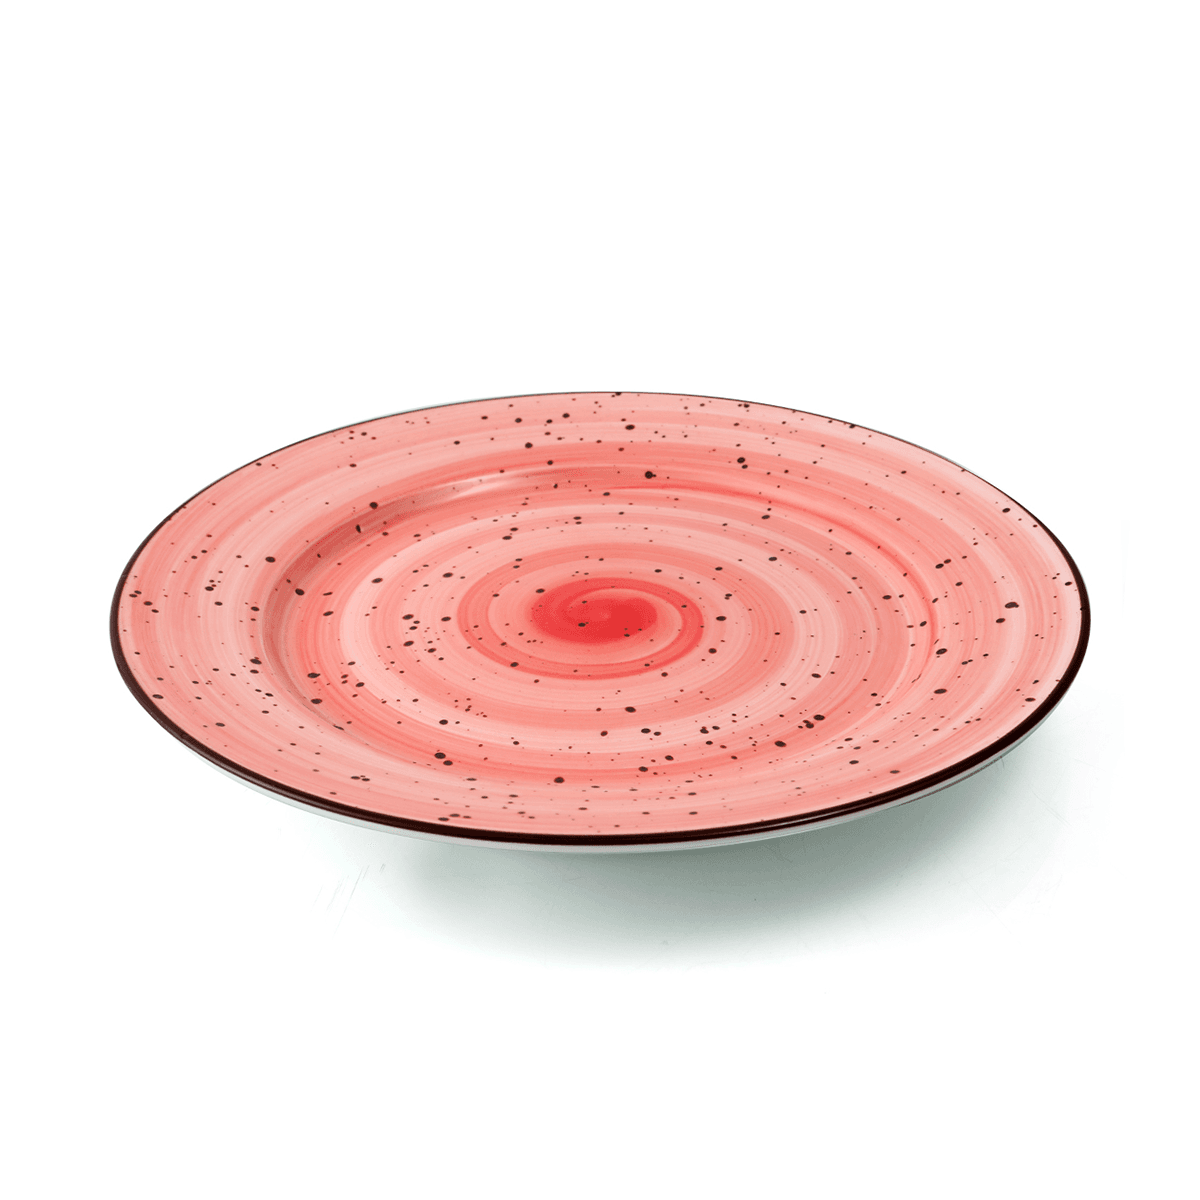 صحن تقديم مسطح بورسلان 9 بوصة أحمر بورسليتا Porceletta Glazed Porcelain Flat Plate